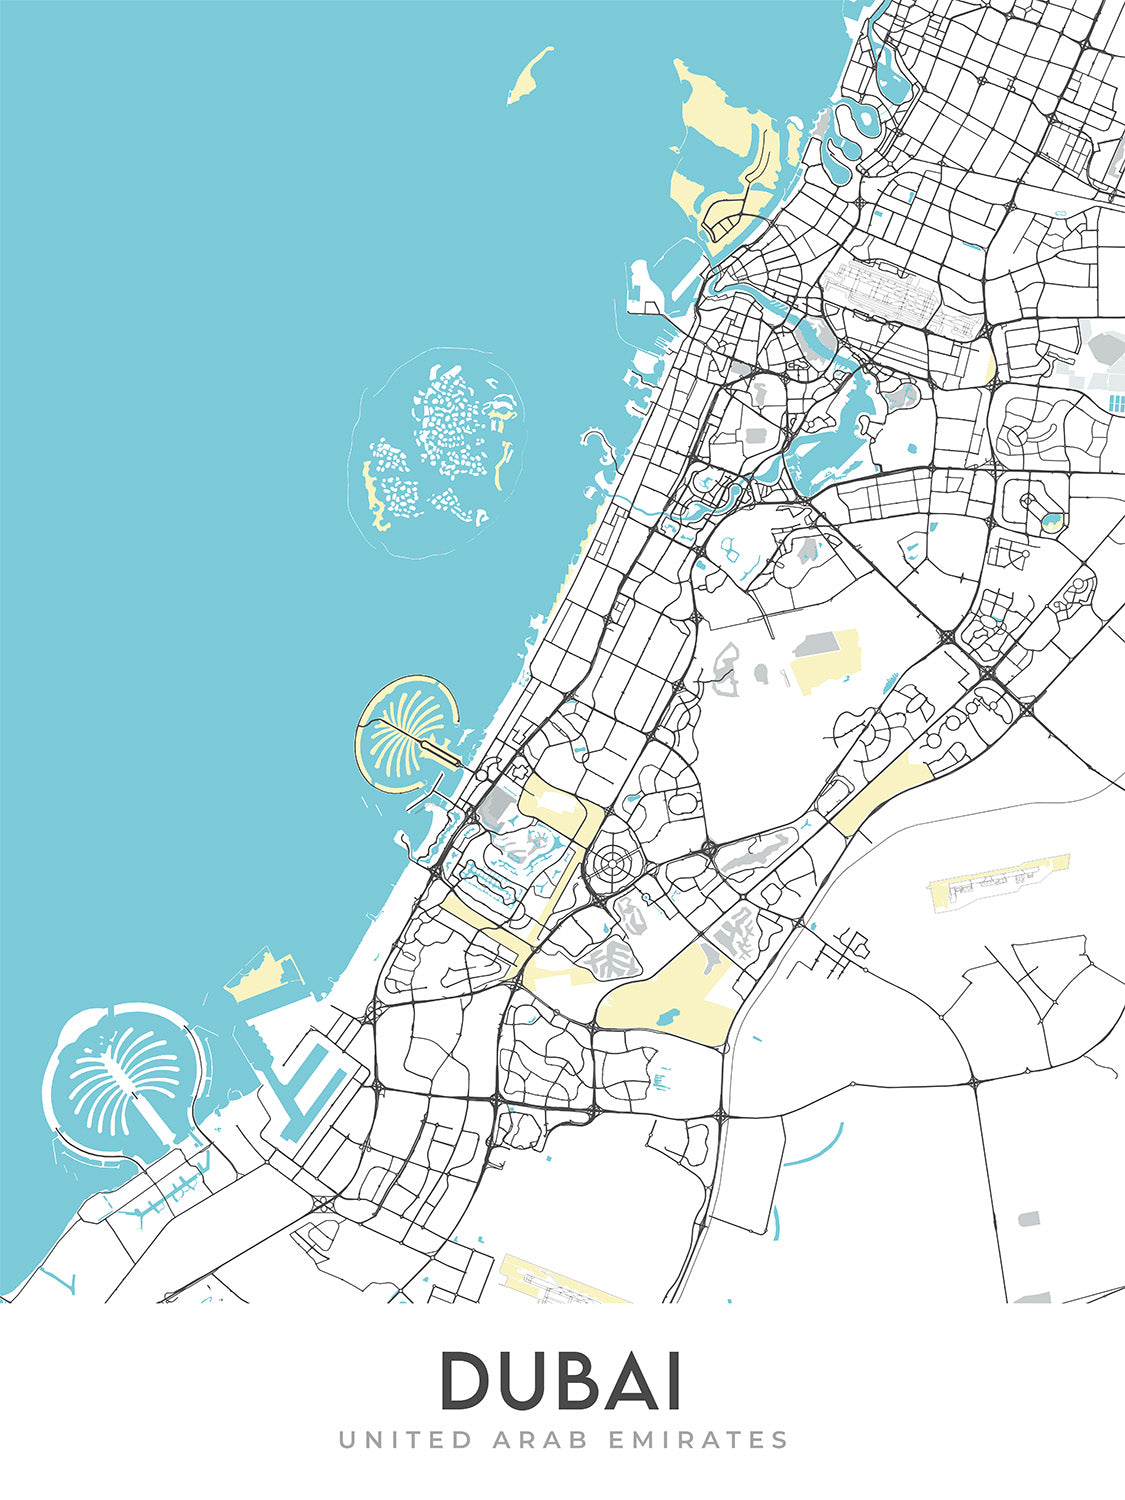 Modern City Map of Dubai, UAE: Burj Khalifa, Palm Jumeirah, Downtown, Marina